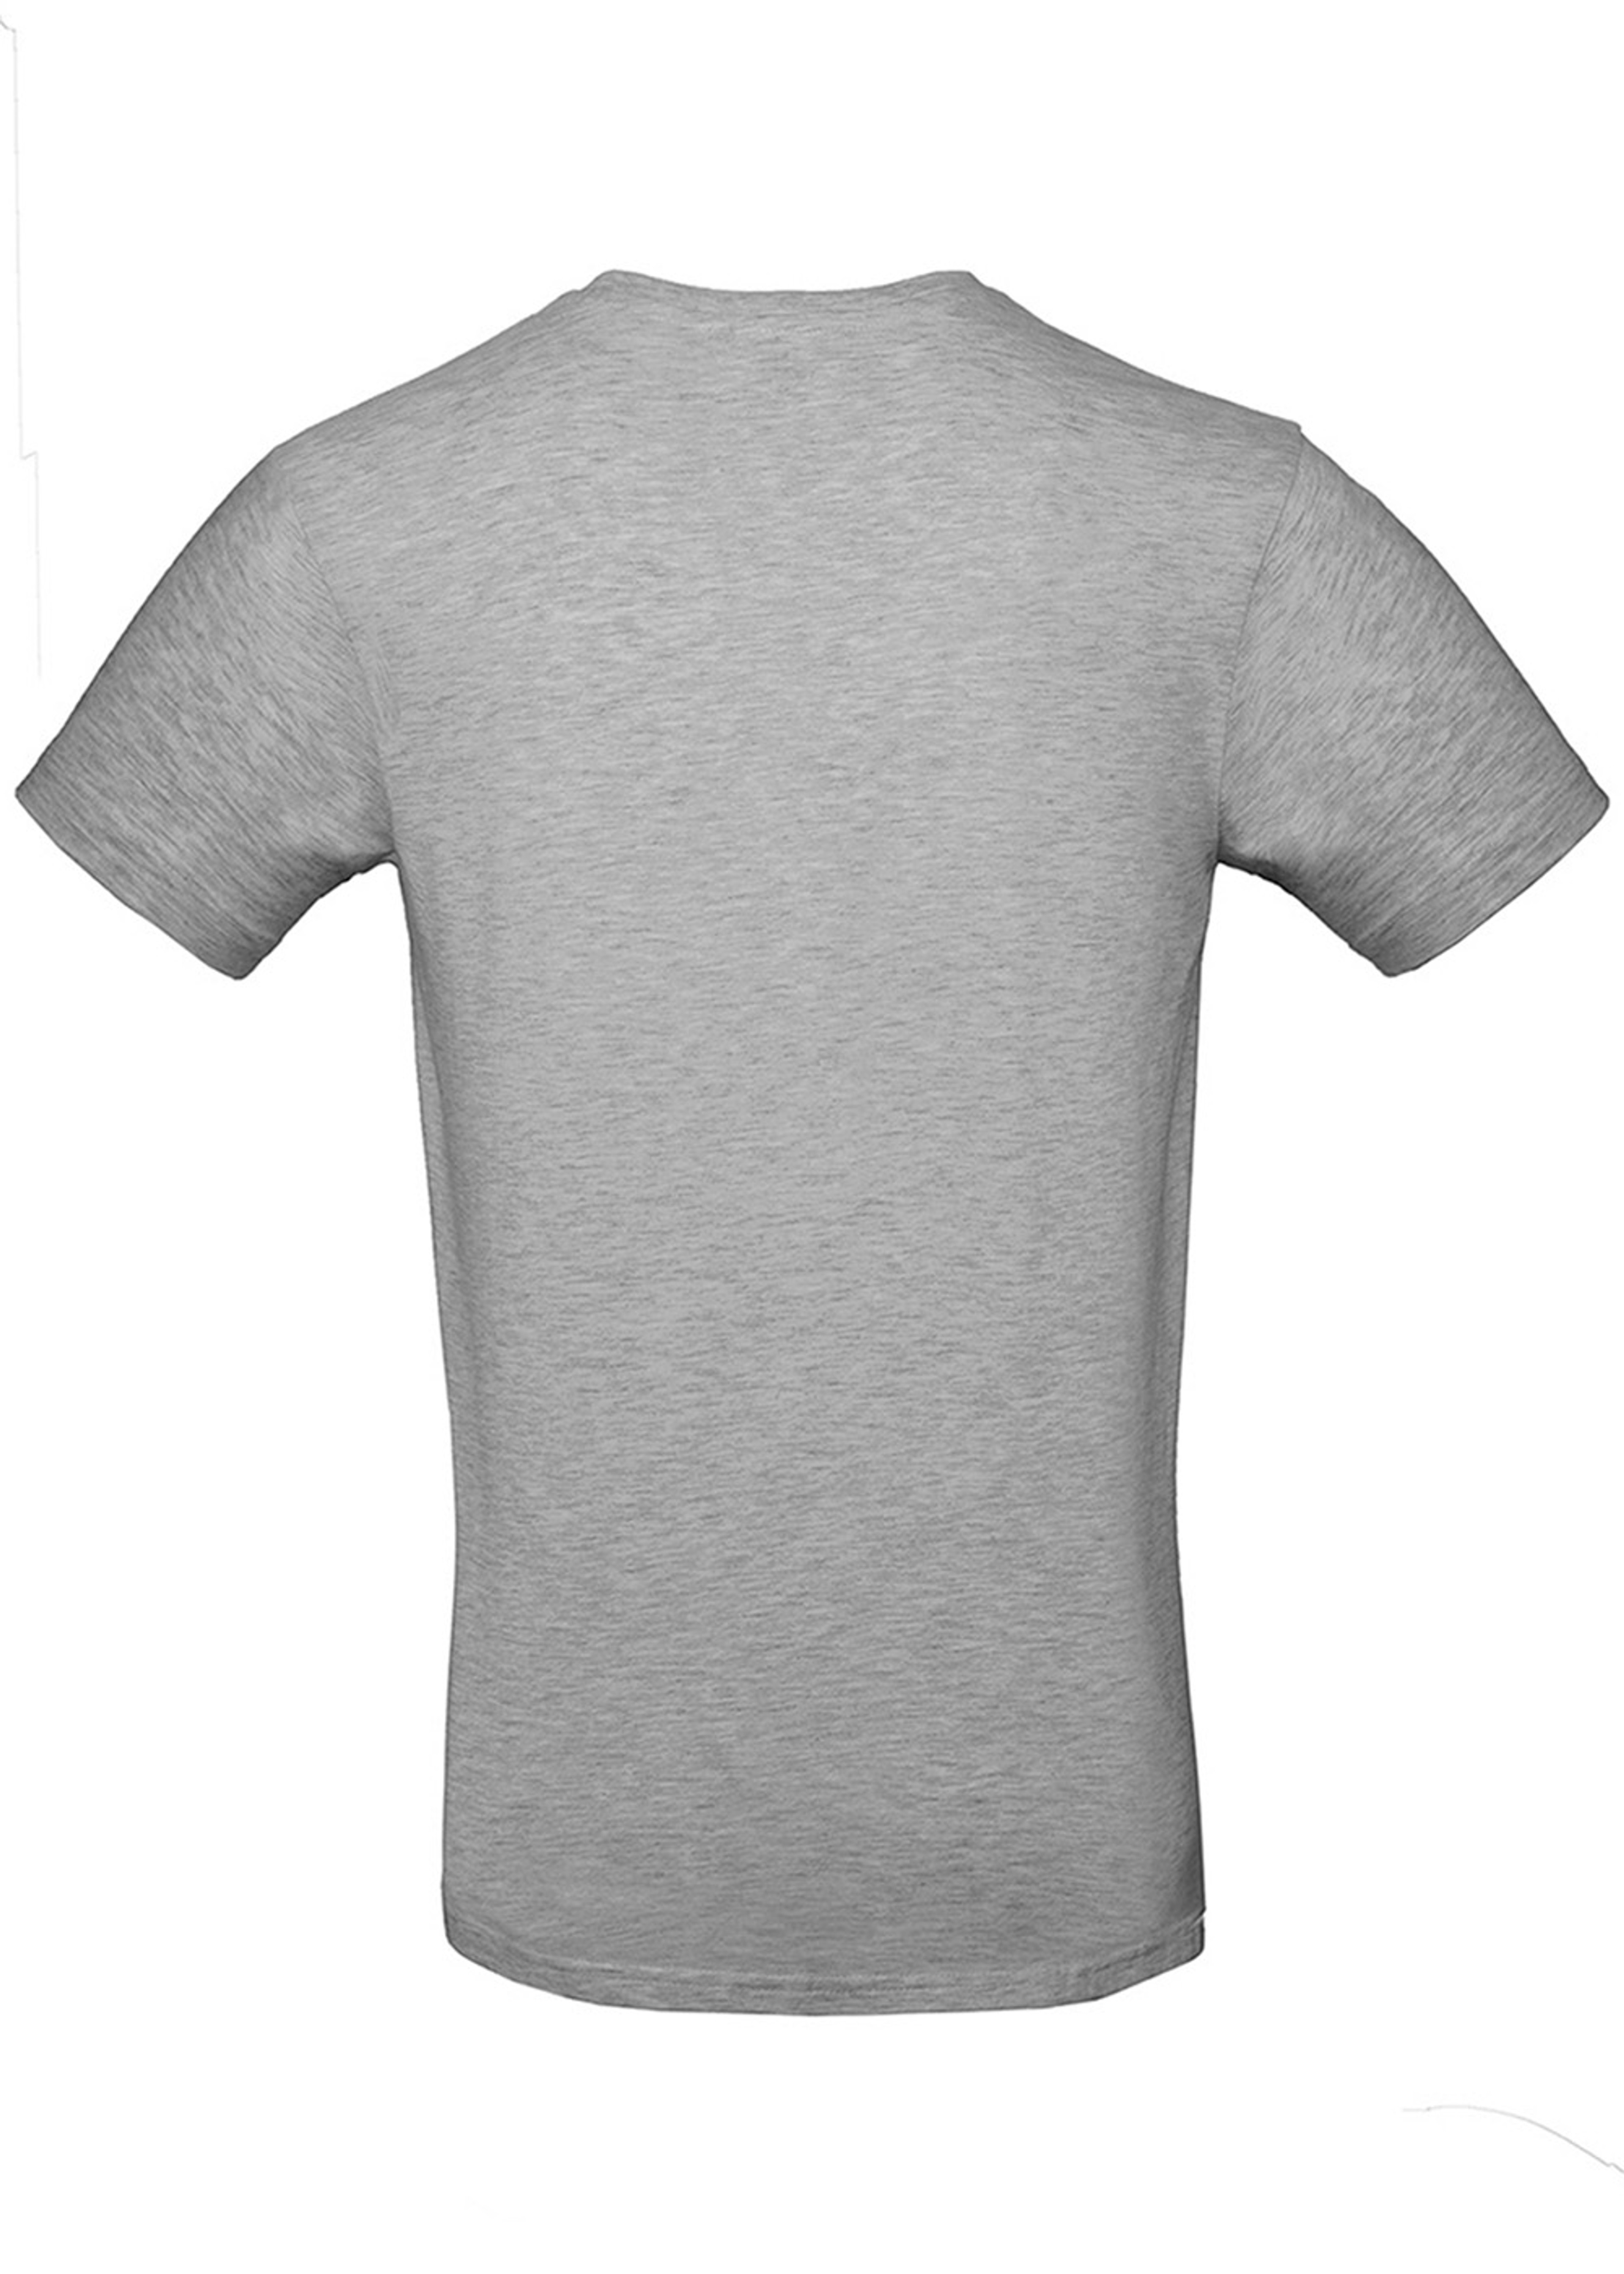 Unisex Fashion T-shirt Sport Grey